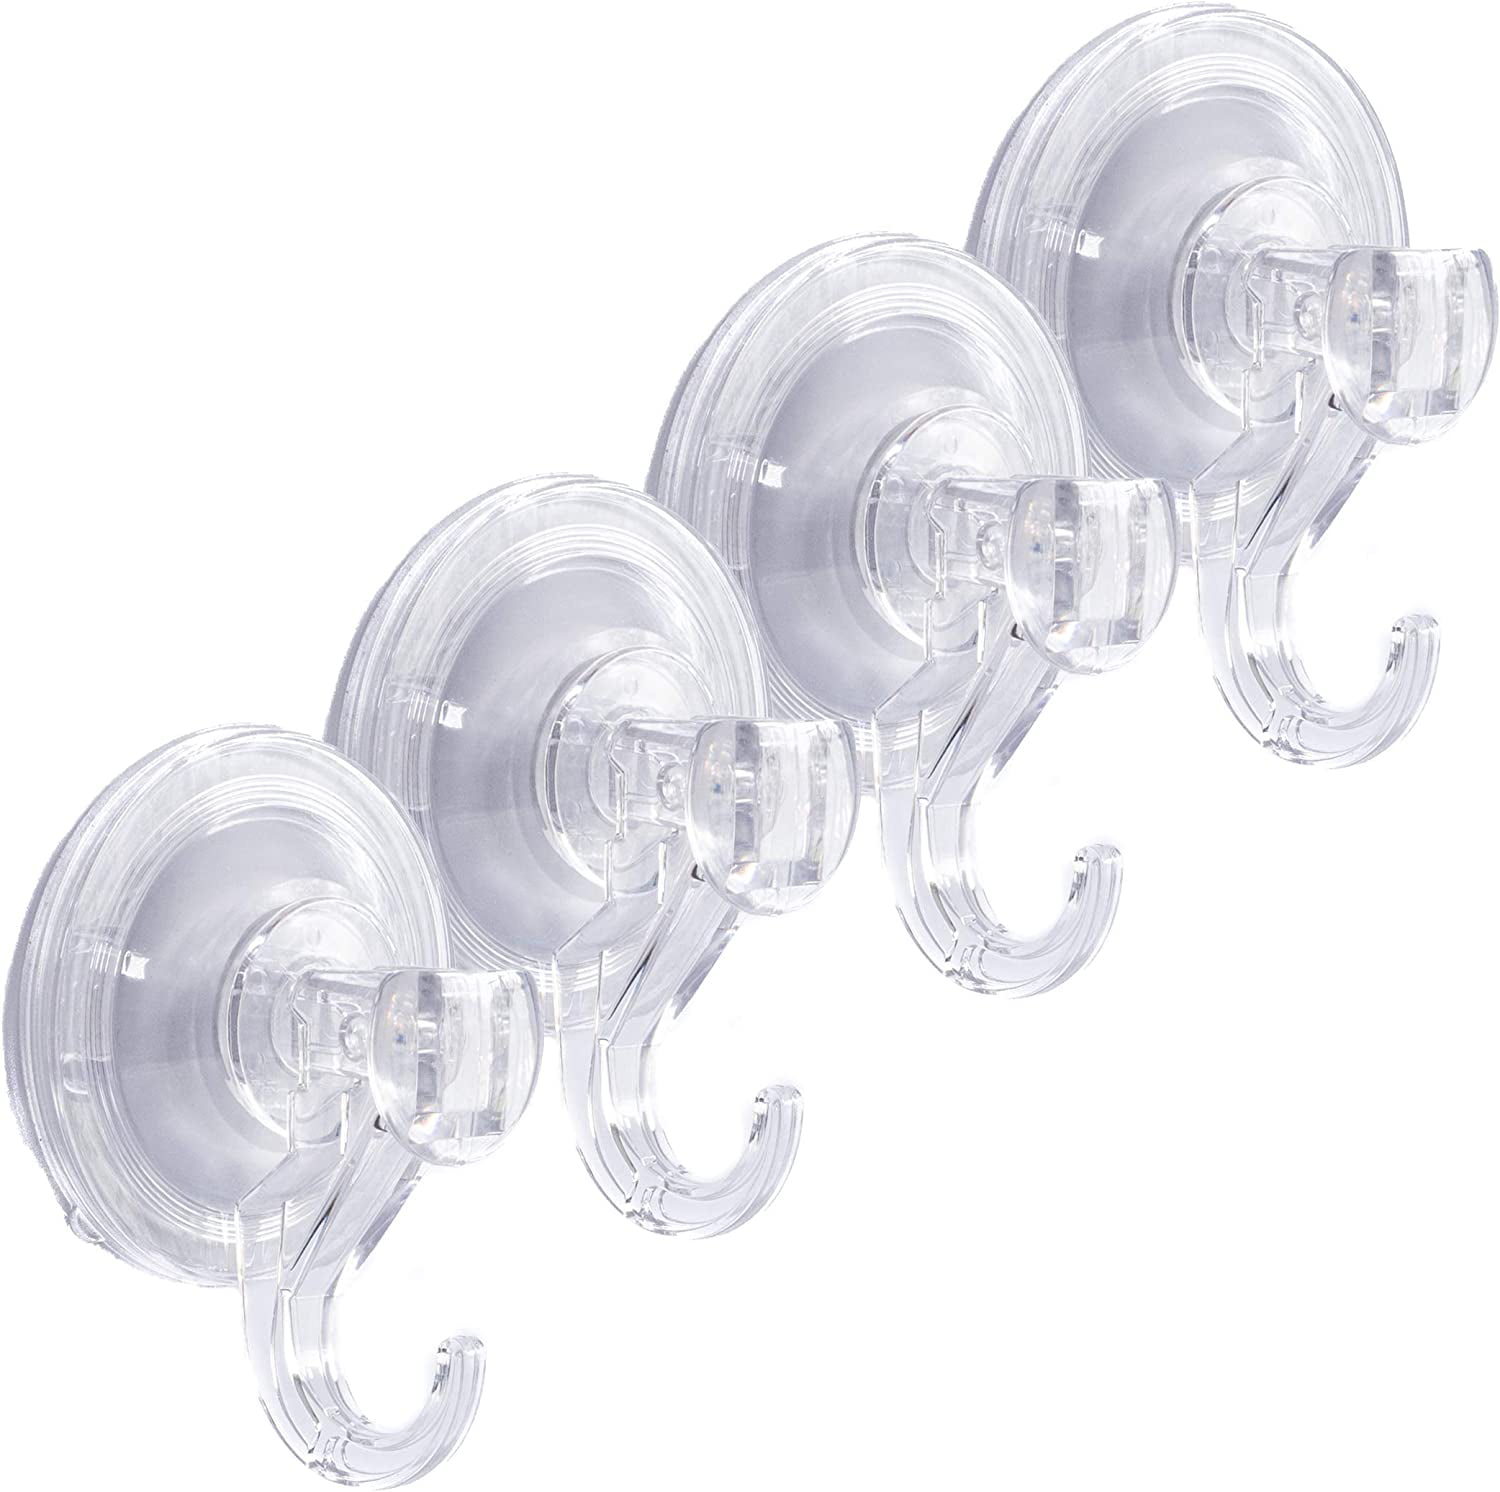 Lishuaiier 4pcs Heavy Duty Suction Cup Hooks for Shower Wall, Shower Hooks for Indoor Shower, Towel, Robe and Loofah Hook, Polished Plated, Silver